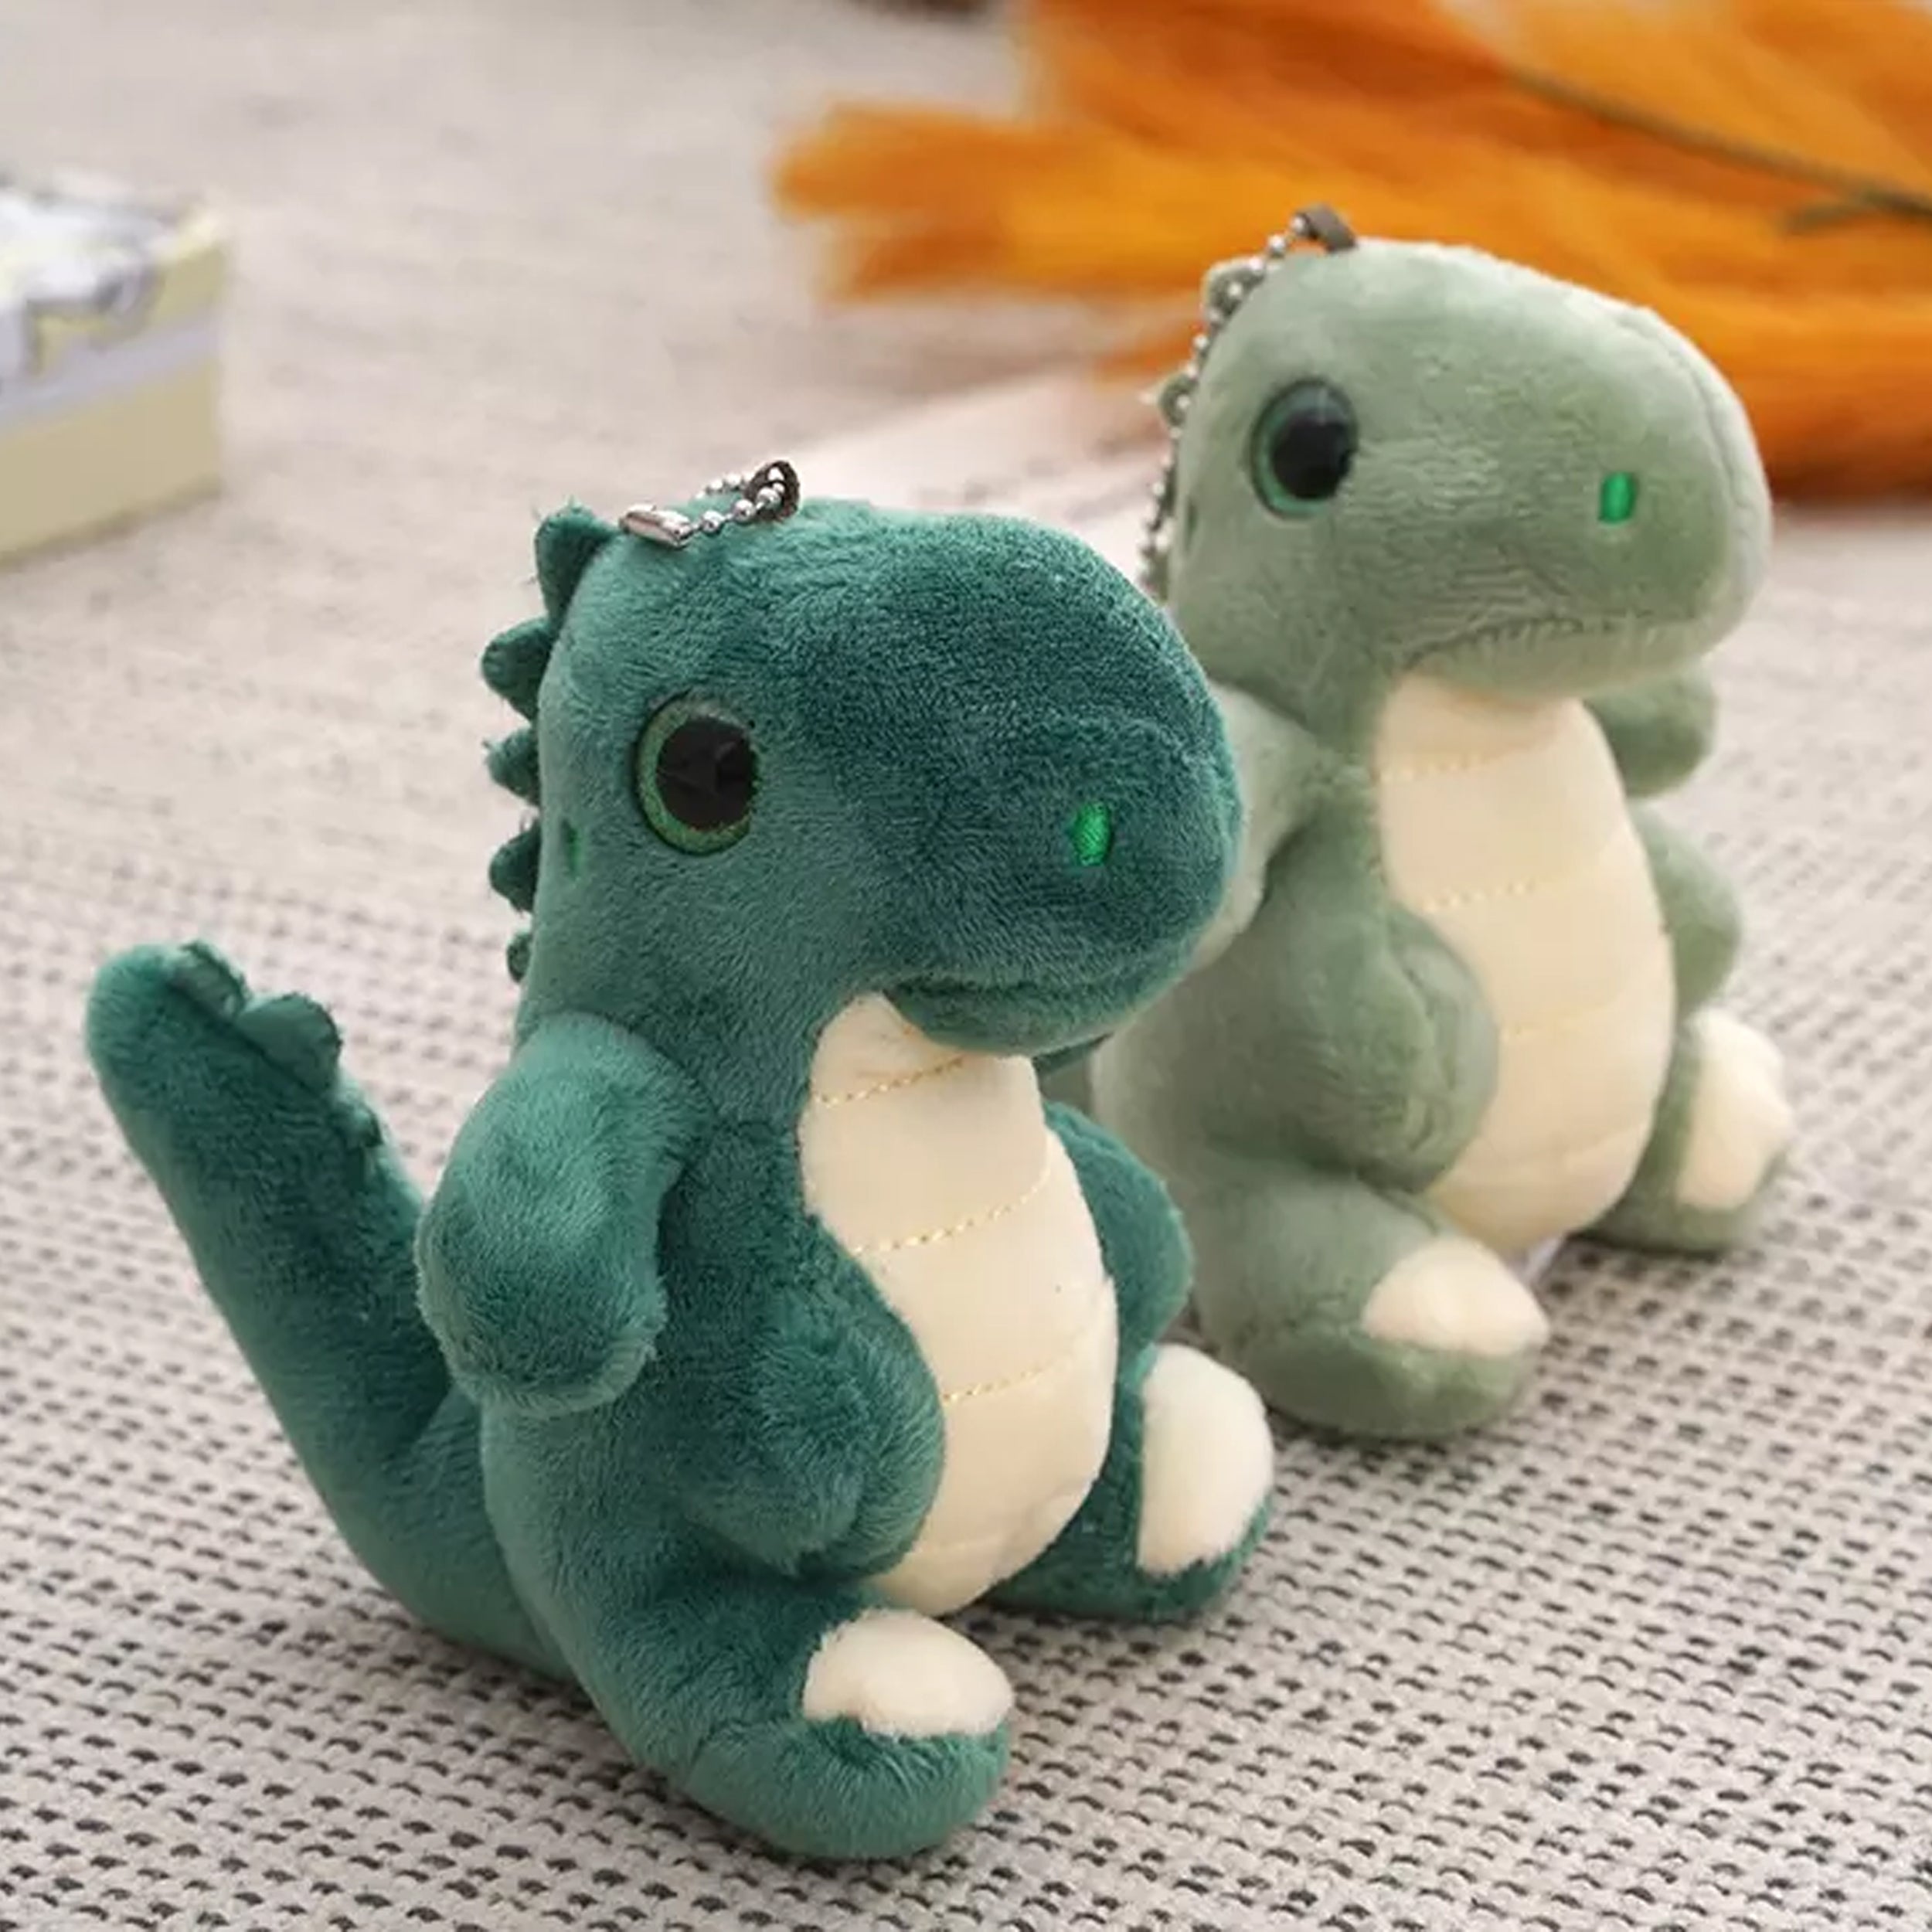 Adorable Big-Eyed Dinosaur Plush Toy Keychain - Assorted Colors